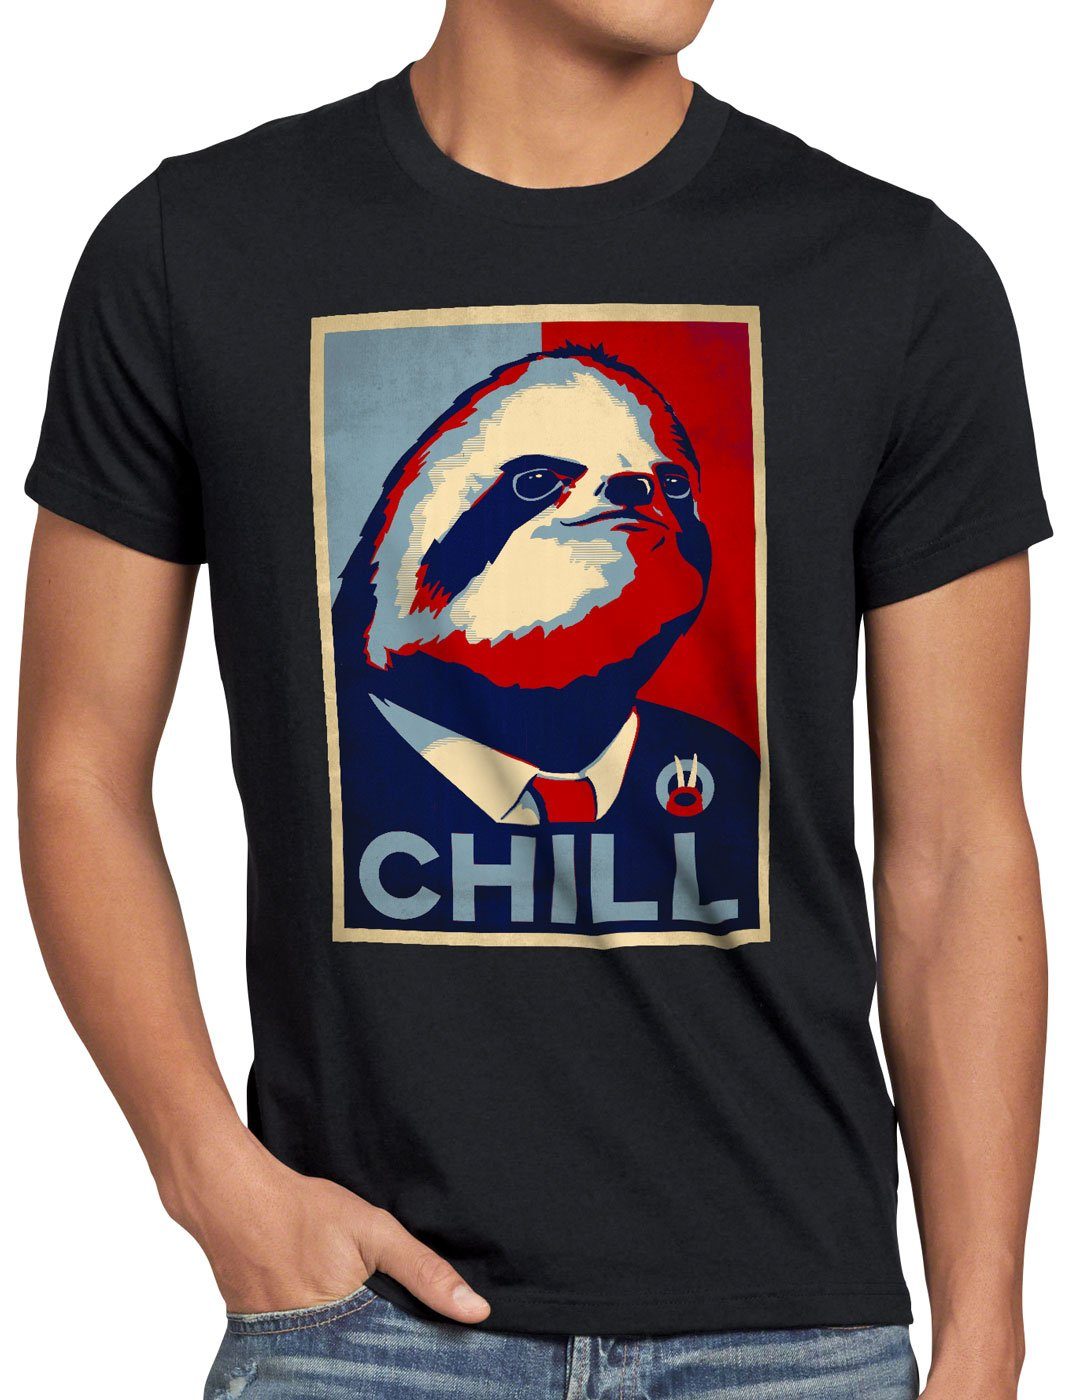 lässig CHILL style3 Herren schwarz T-Shirt kampagne faultier Print-Shirt